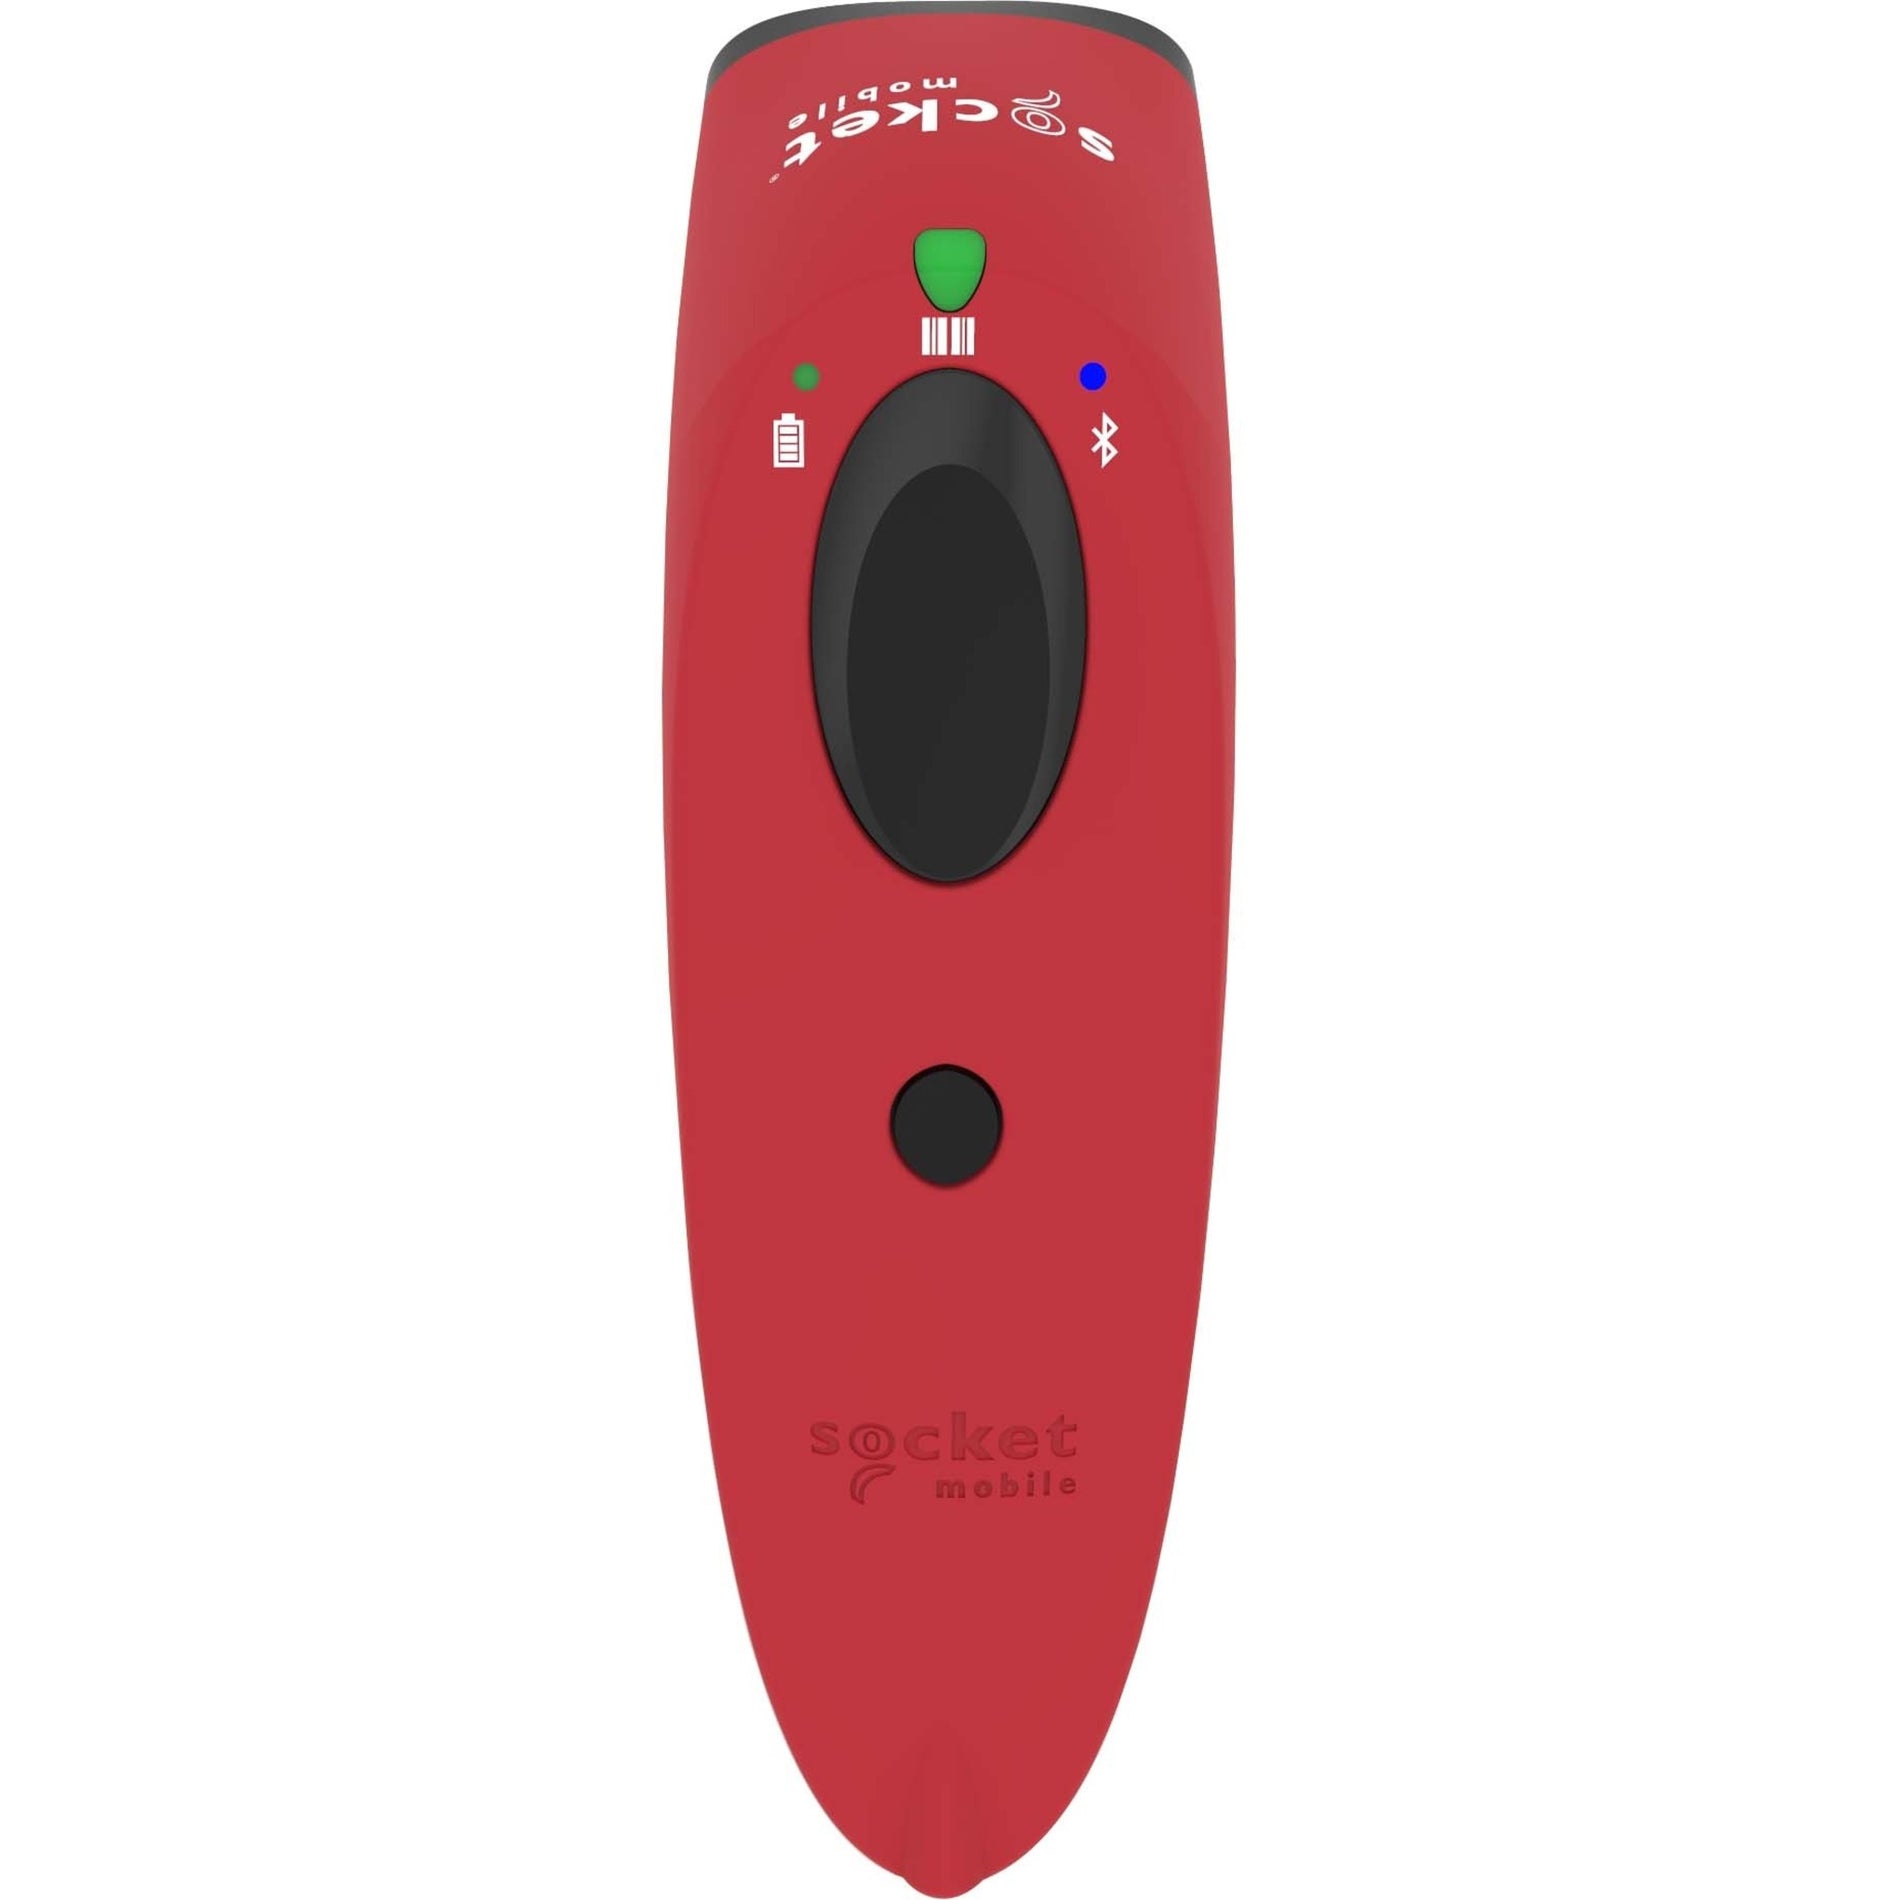 Socket Mobile CX3413-1832 SocketScan S740 Universal Barcode Scanner, Red